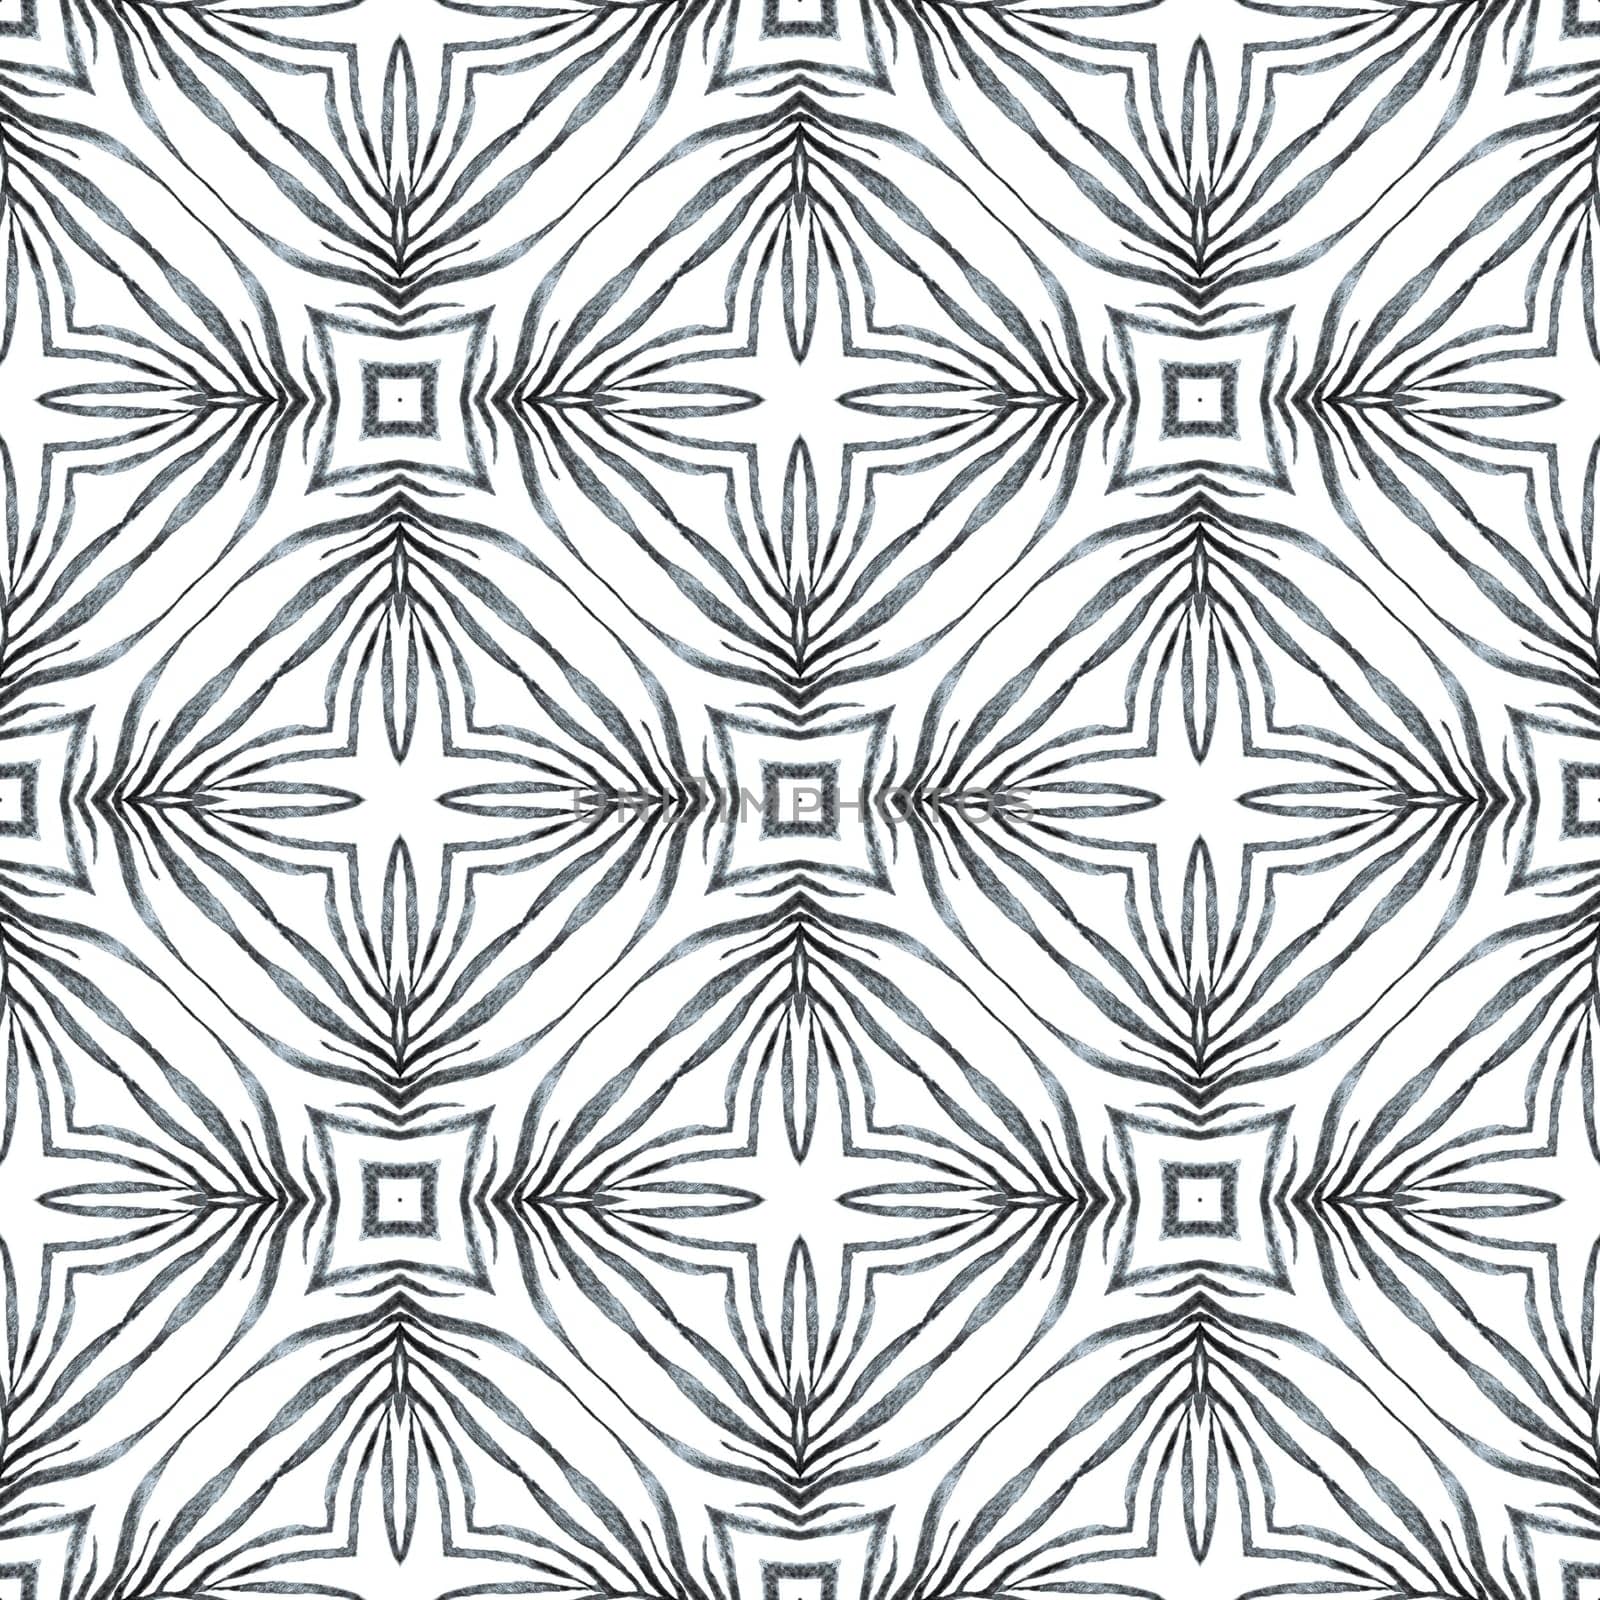 Chevron watercolor pattern. Black and white mind-blowing boho chic summer design. Green geometric chevron watercolor border. Textile ready superb print, swimwear fabric, wallpaper, wrapping.